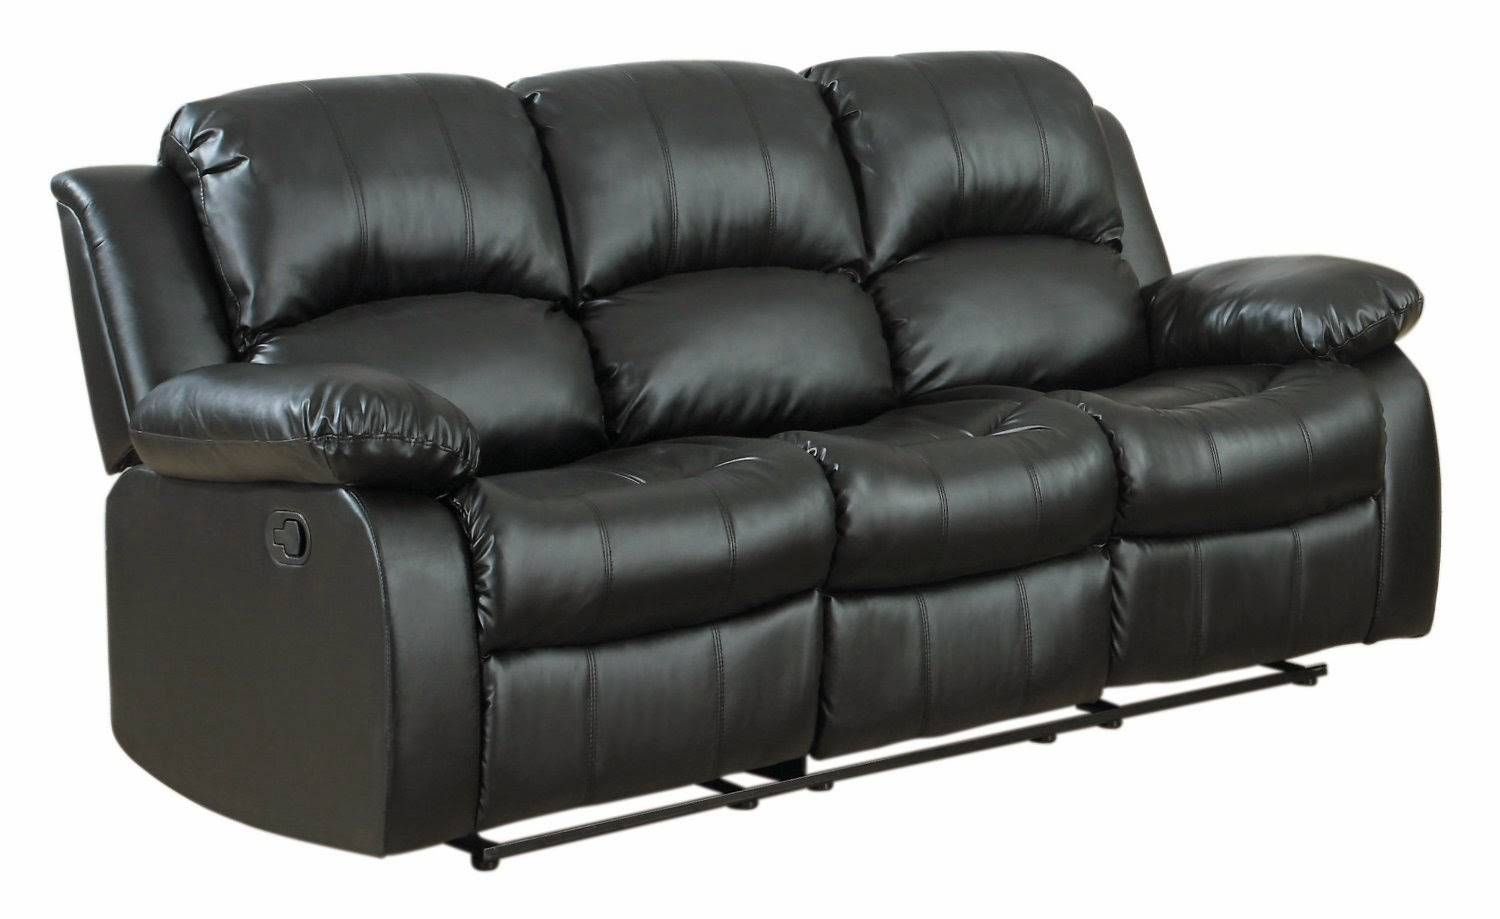 Reclining Sofas For Sale: Berkline Leather Reclining Sofa Costco With Regard To Berkline Recliner Sofas (View 5 of 15)